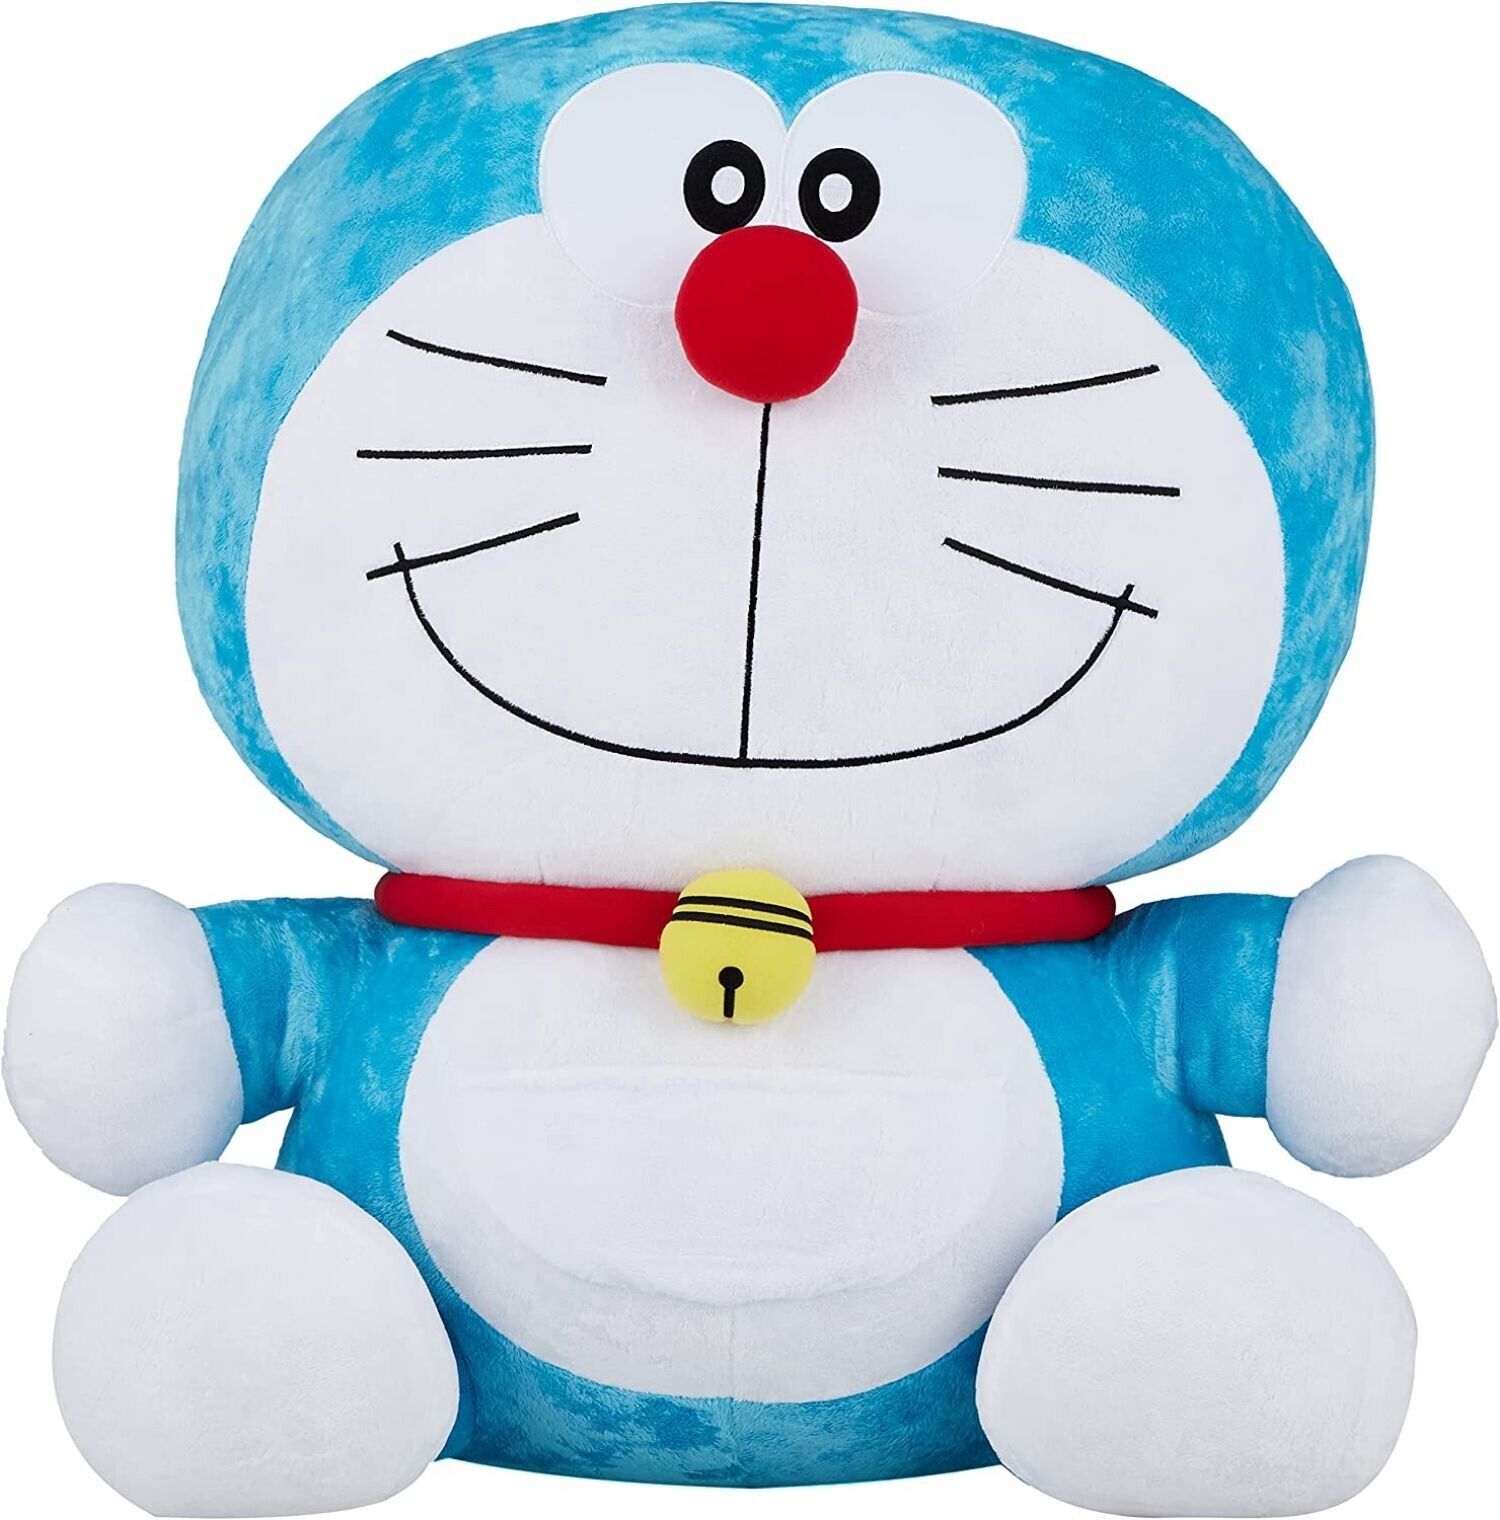 Doraemon Plush Dora emon 3L size / Doll Stuffed toy Sekiguchi Japan NEW